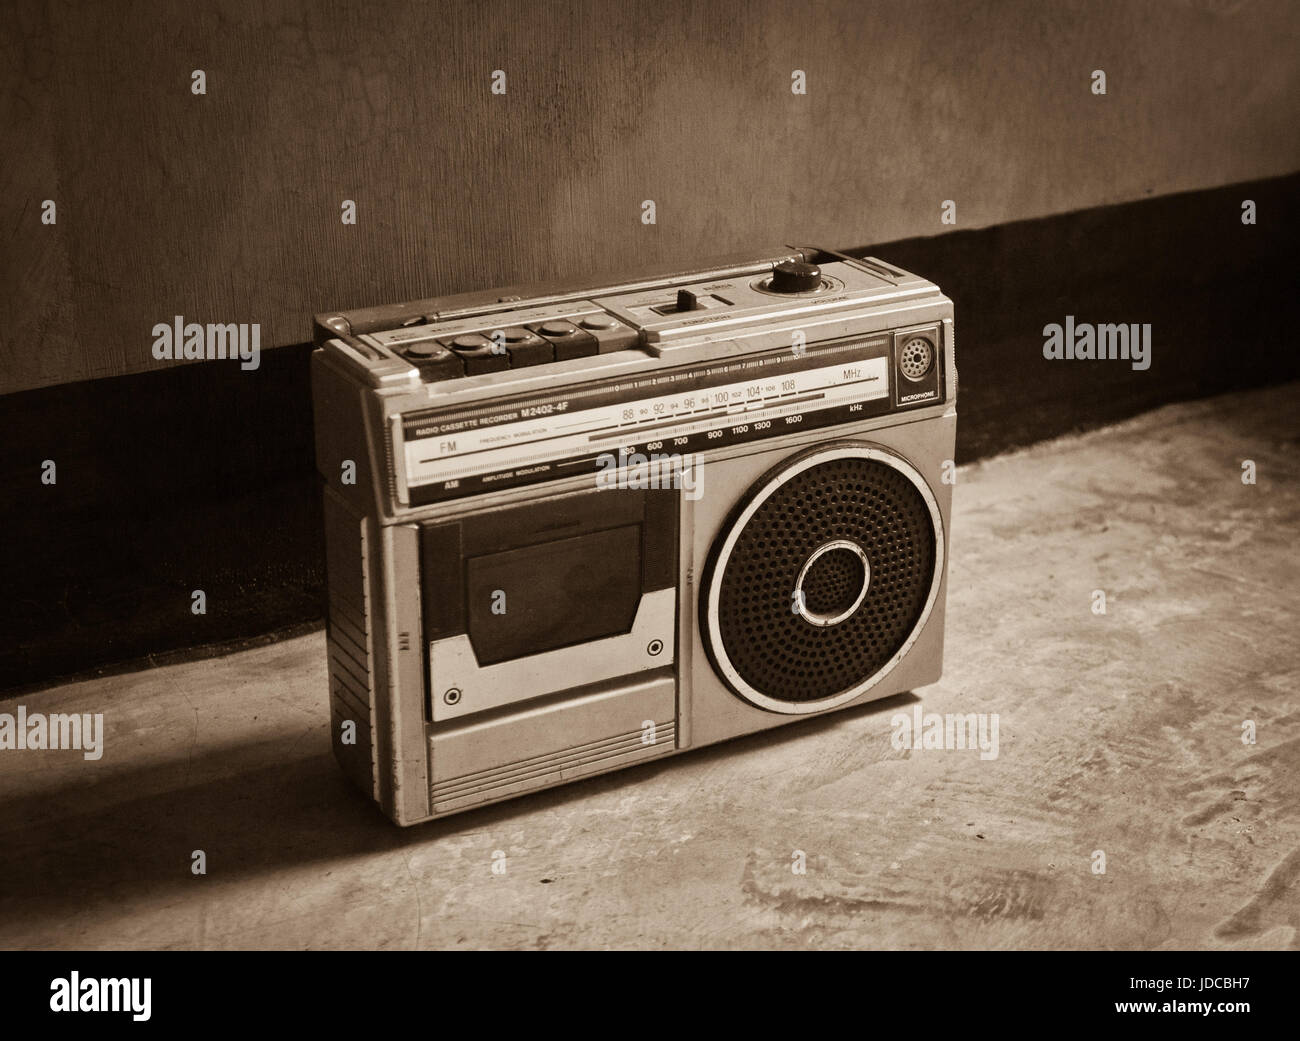 Old vintage Radio, classic style Stock Photo - Alamy